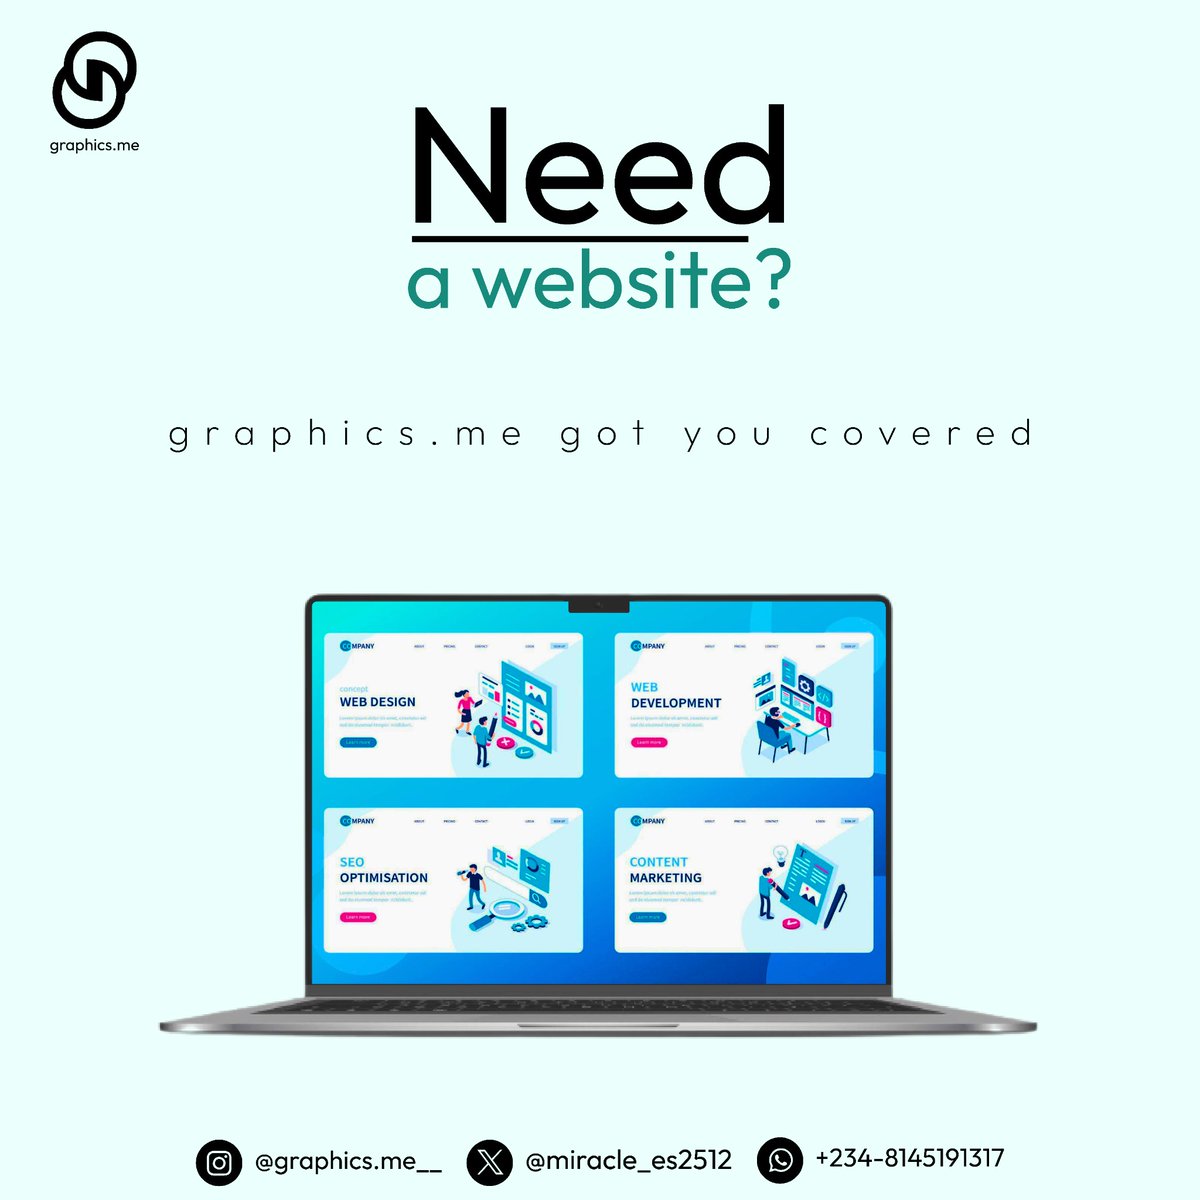 Need a website.... Graphics.me got you covered 
#WebDesign #UXDesign #UI #DigitalDesign #WebDevelopment #DesignInspiration #ResponsiveDesign #CreativeWebDesign #FrontEnd #UserExperience #DesignTrends